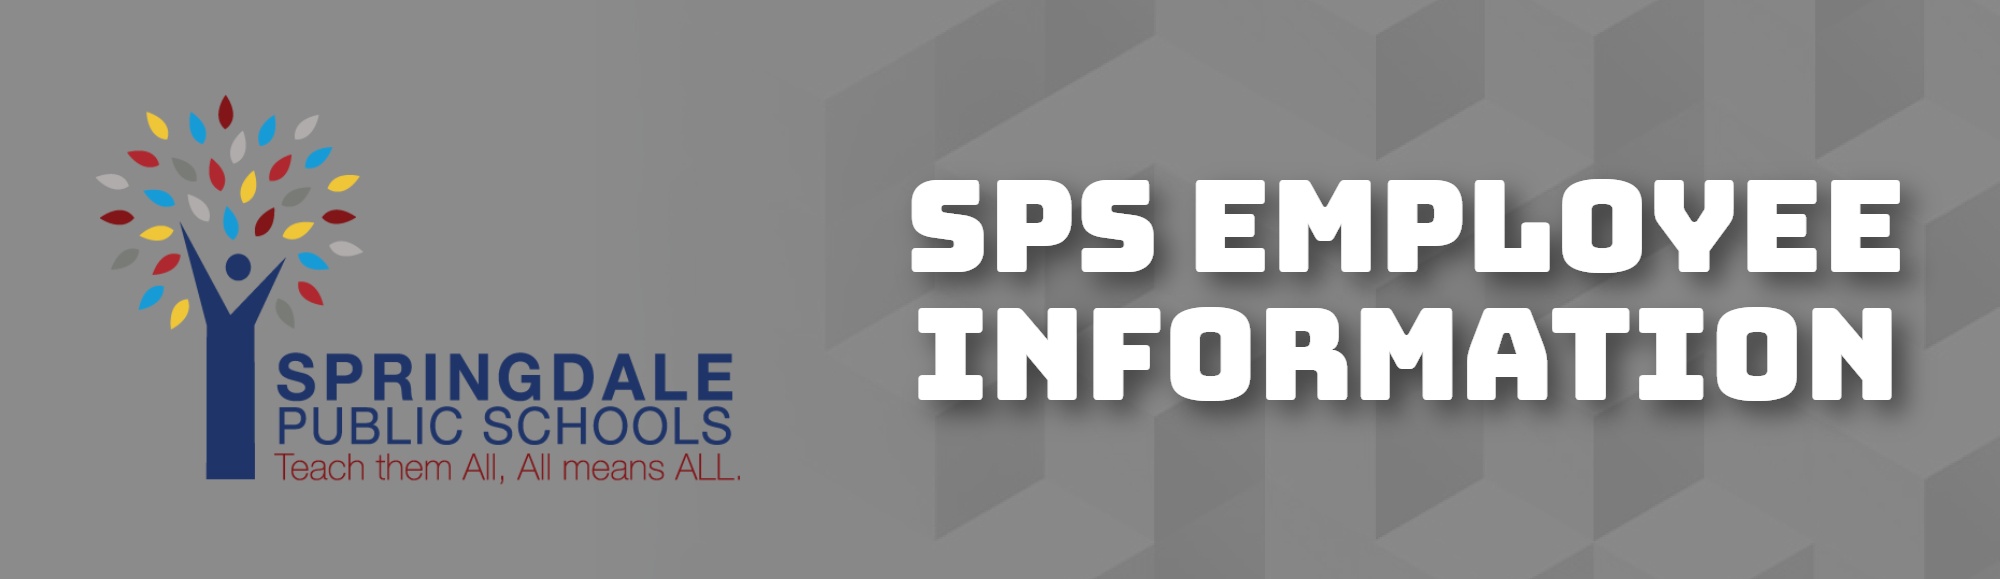 SPS Employee Information